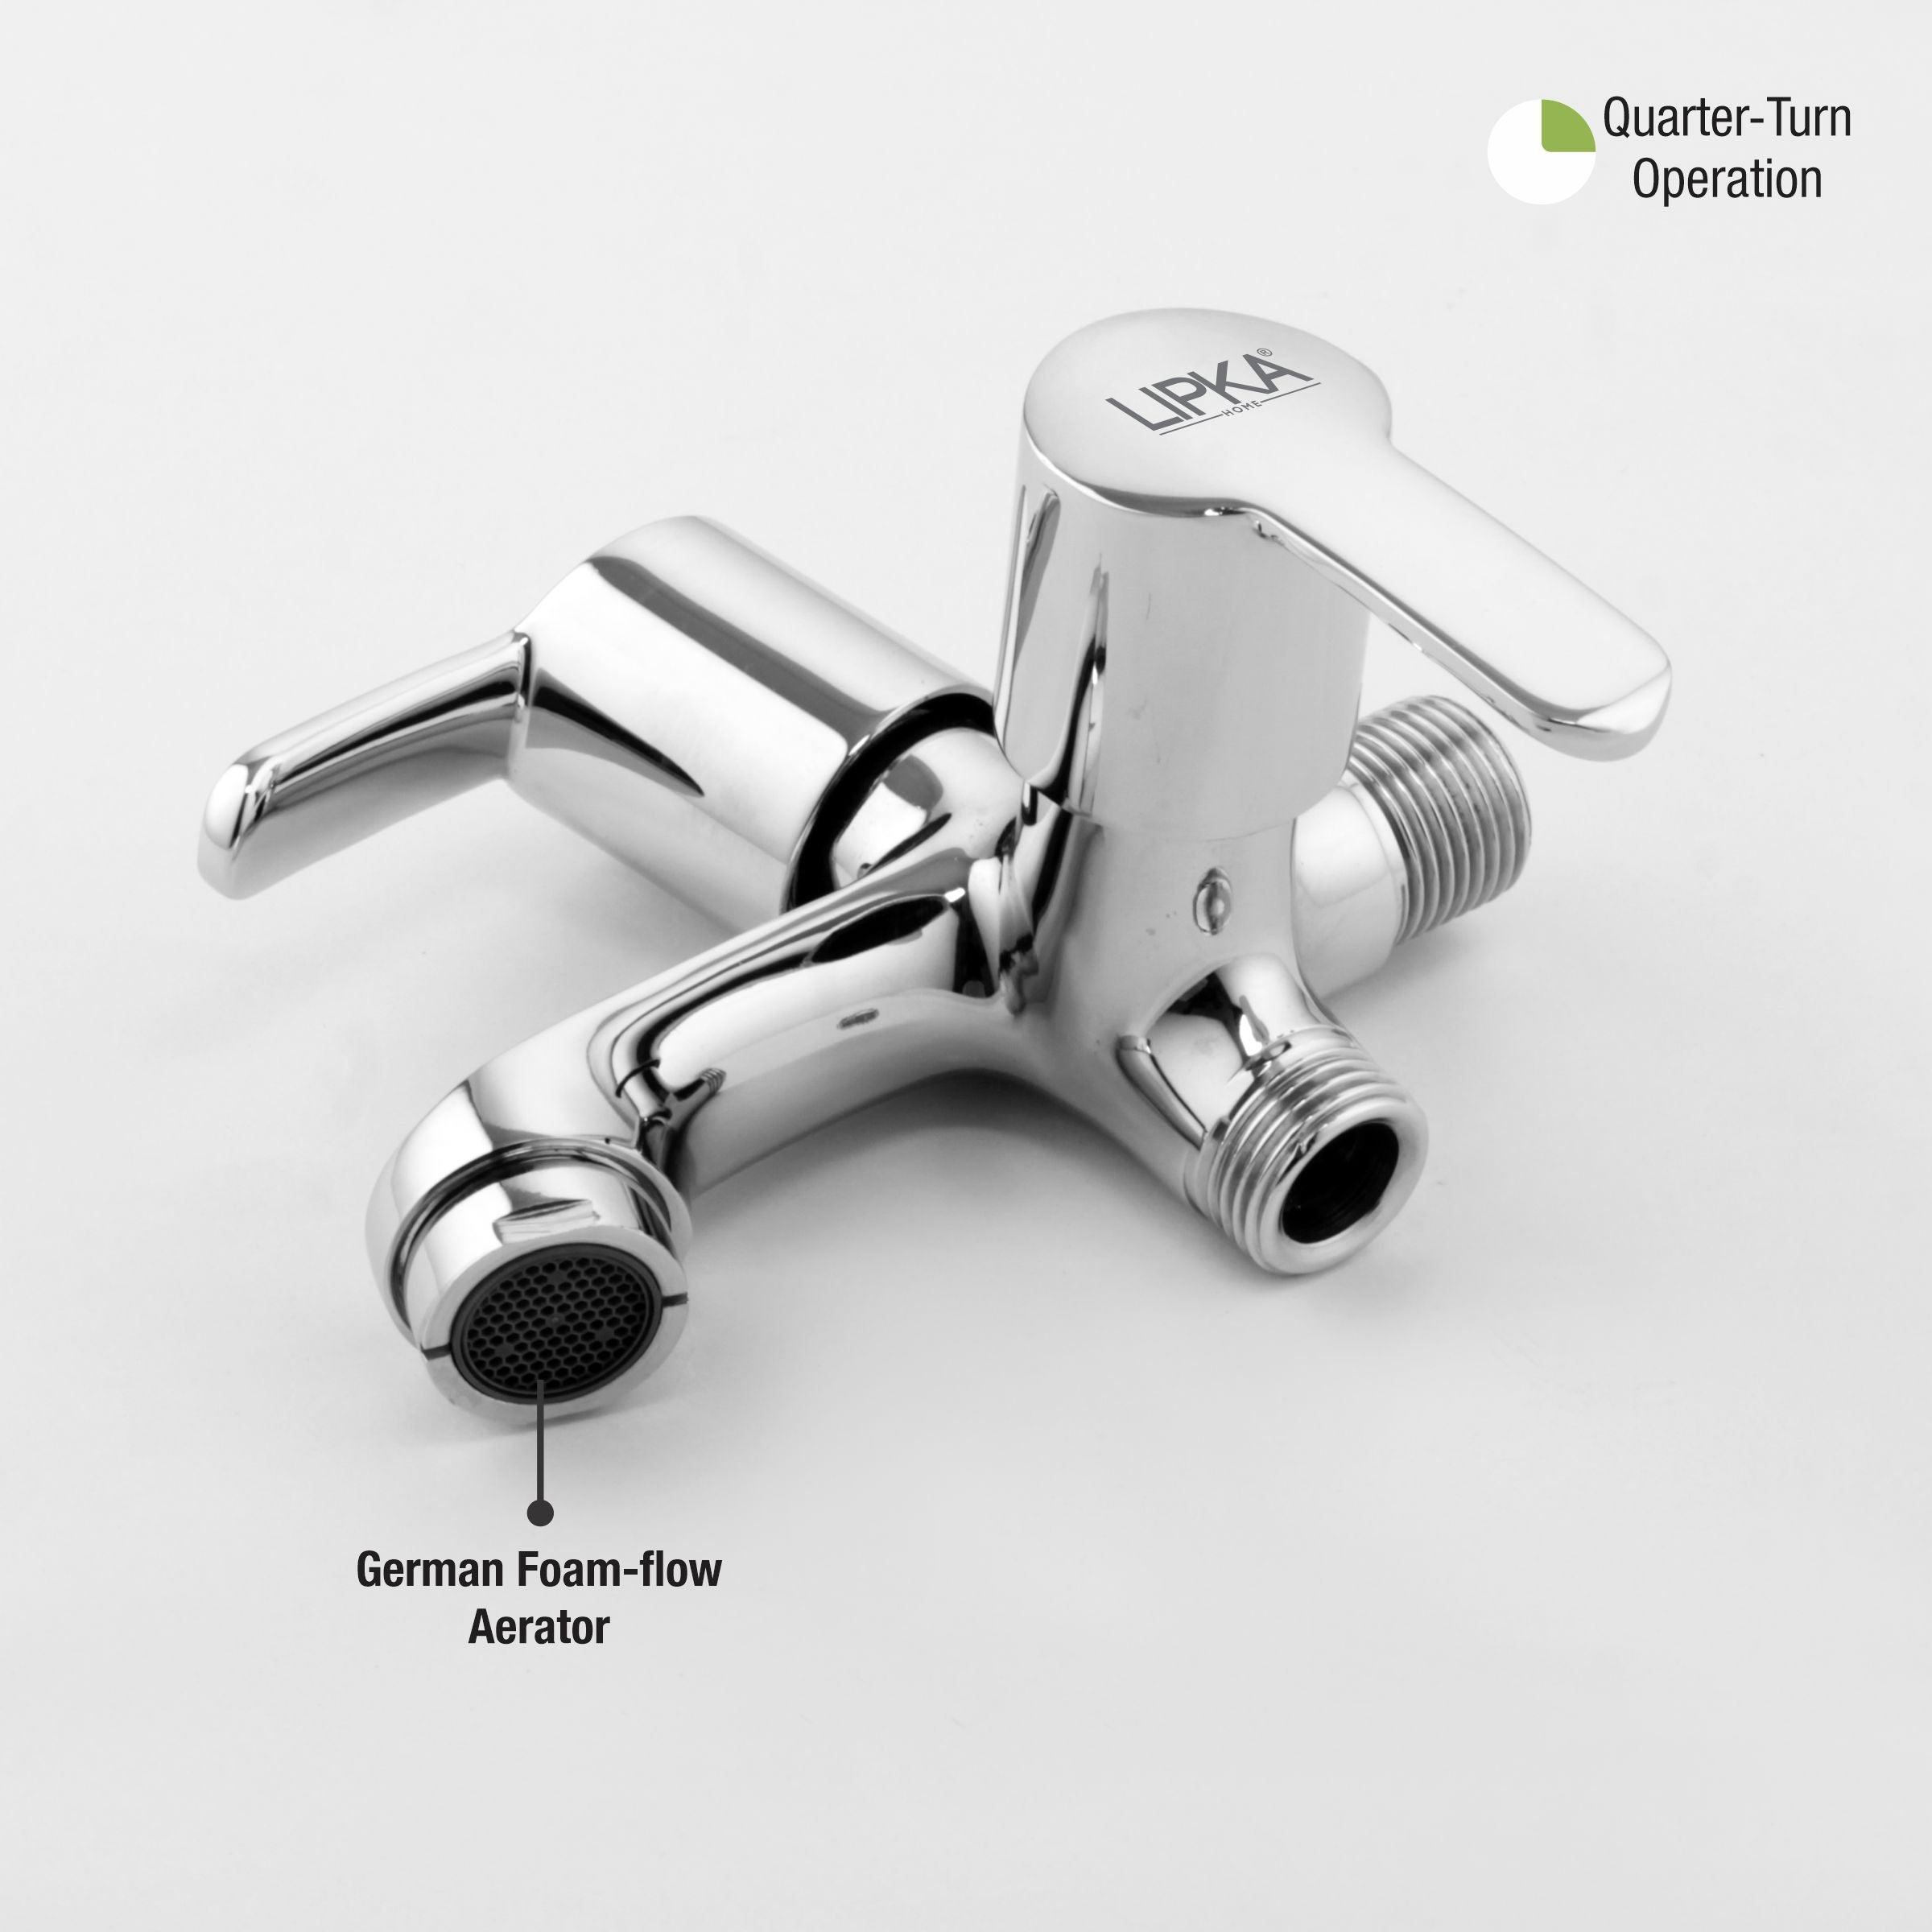 Frenk Two Way Bib Tap Faucet (Double Handle) - LIPKA - Lipka Home